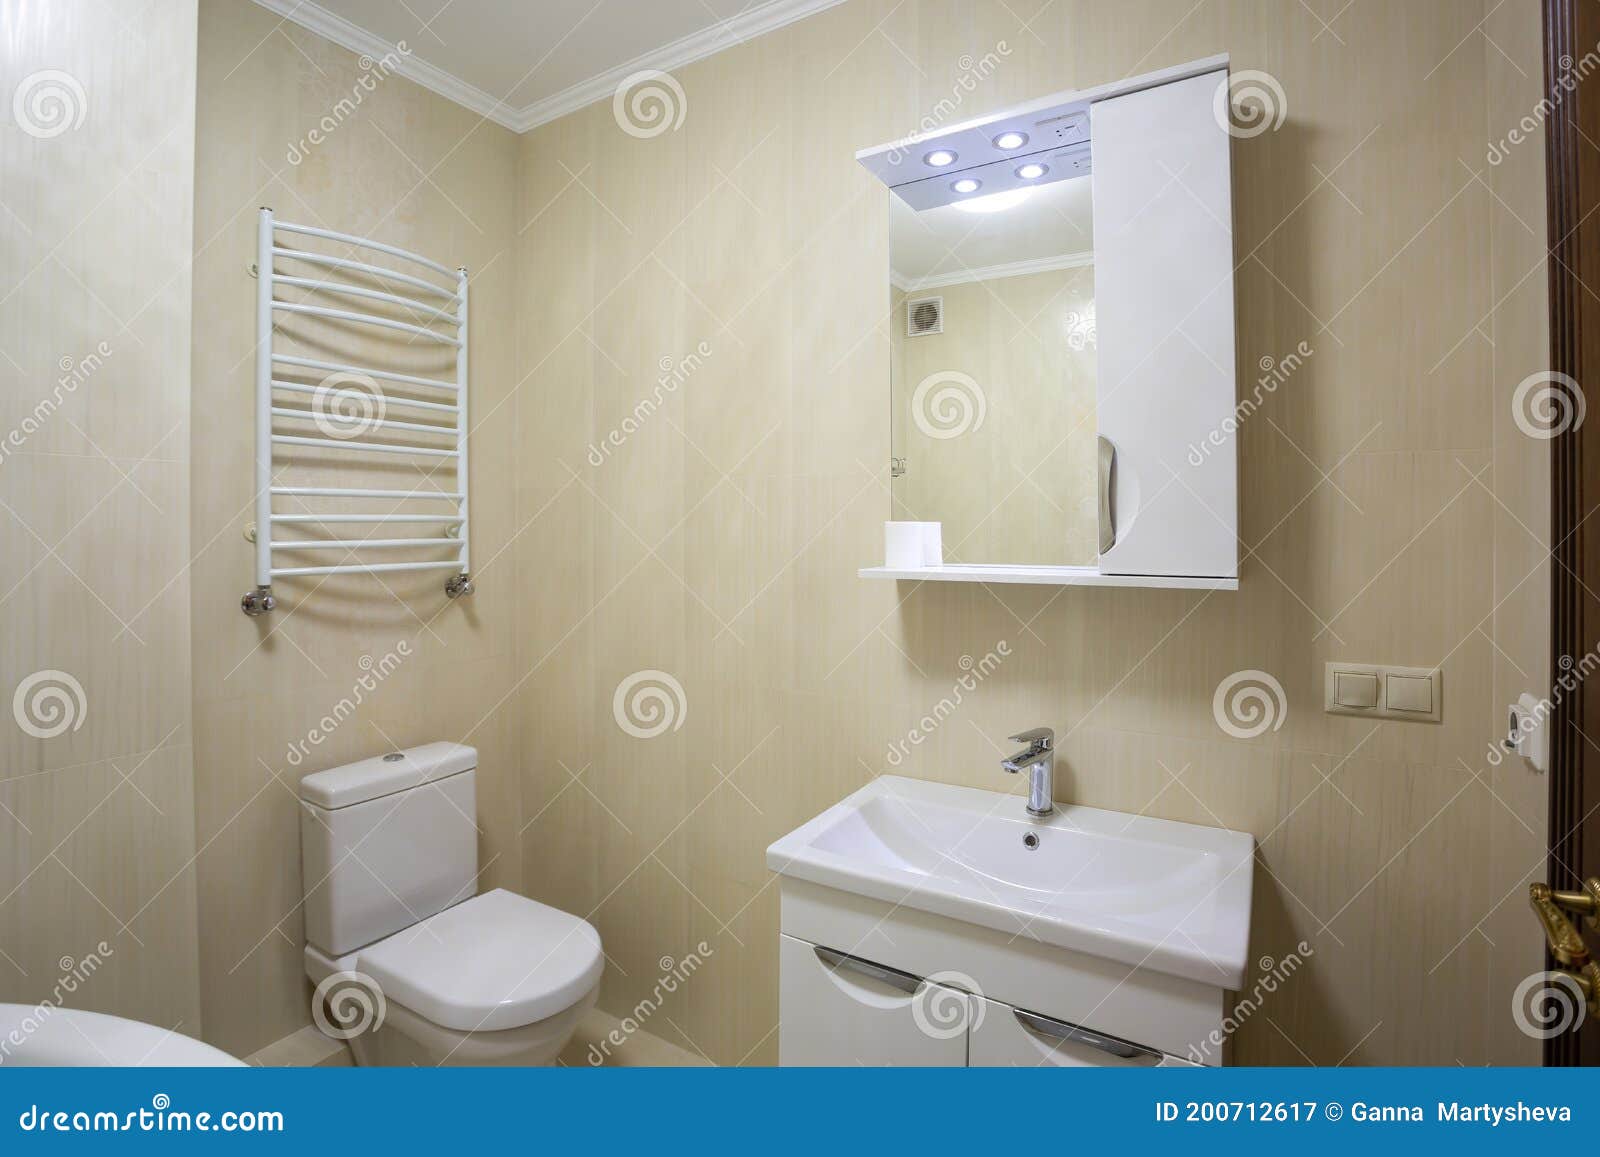 https://thumbs.dreamstime.com/z/modern-bathroom-jacuzzi-bath-staronavodnitskaya-kiev-ukraine-200712617.jpg